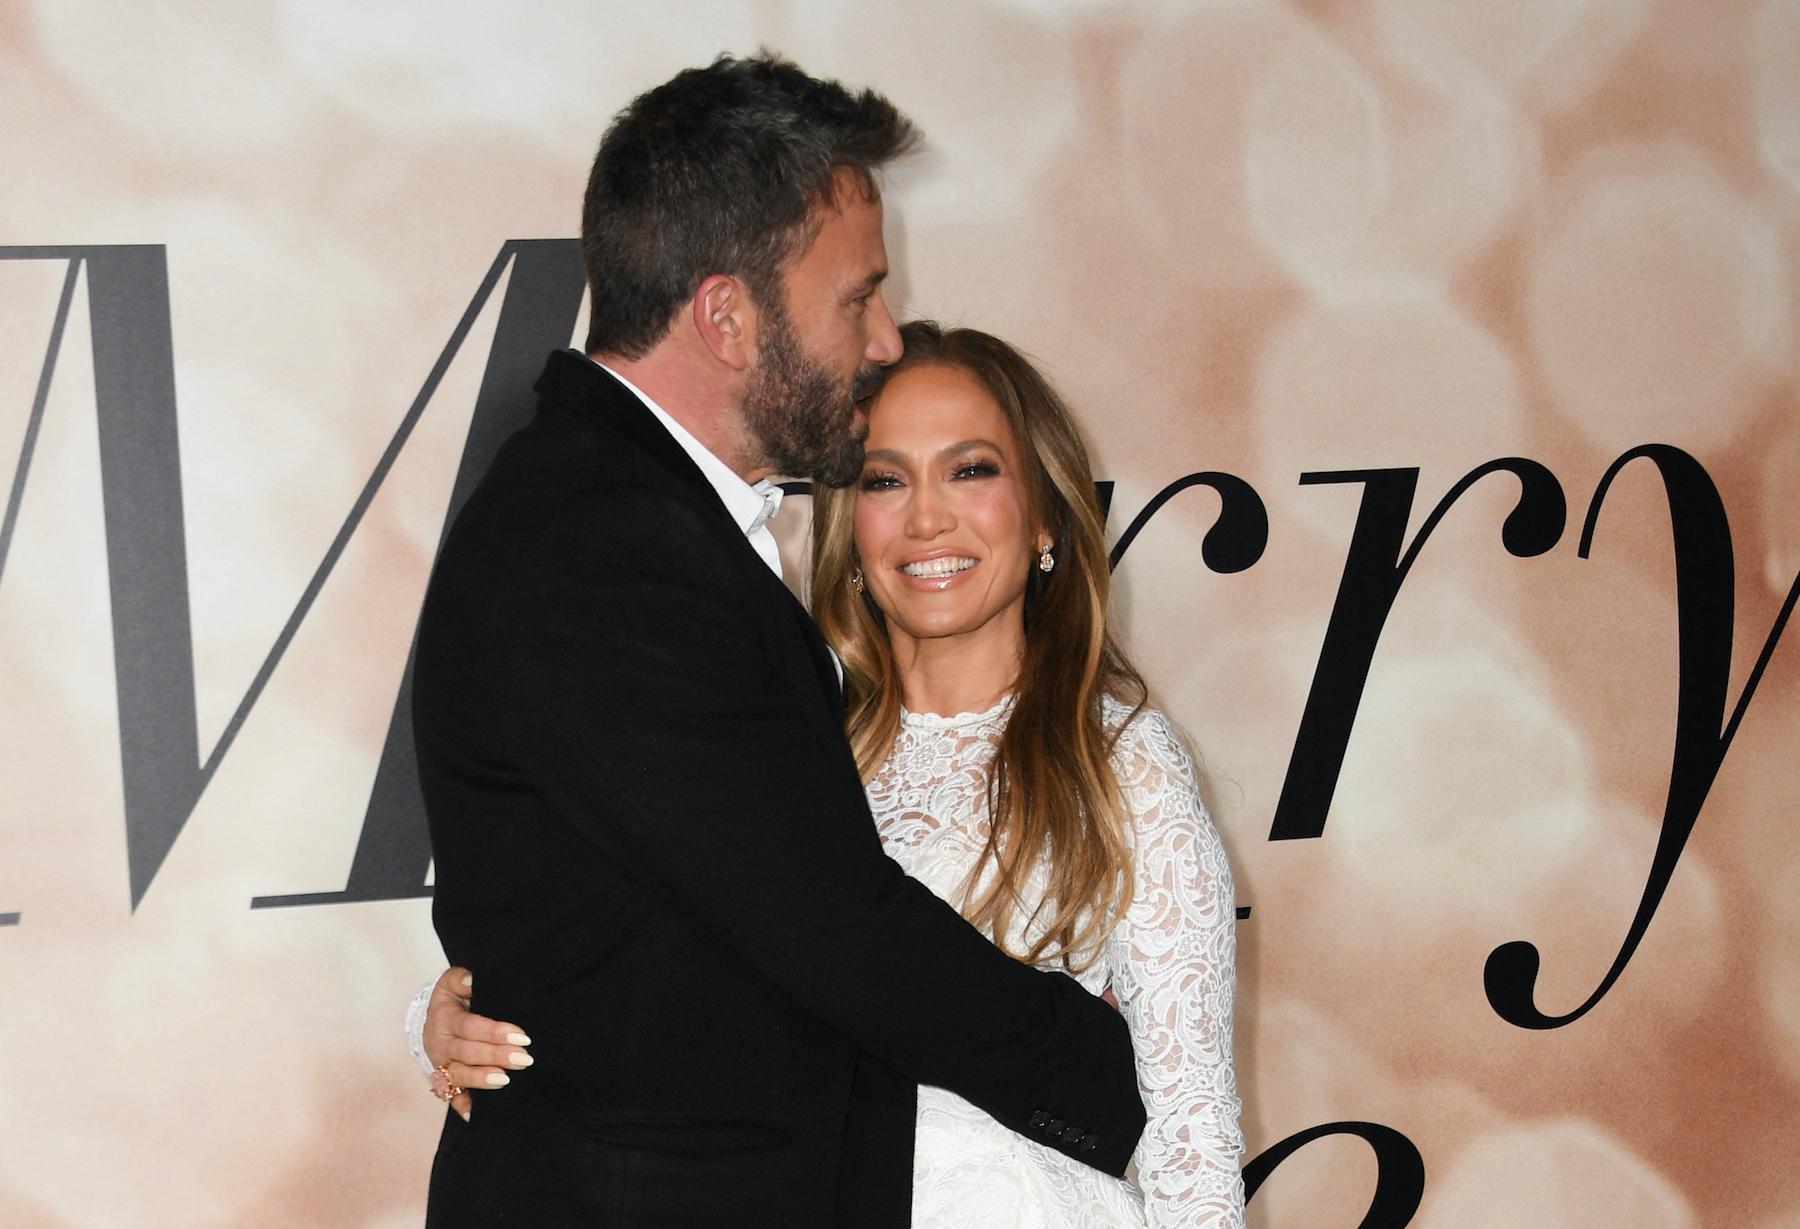 Jennifer Lopez, Ben Affleck get marriage license in Las Vegas —local official